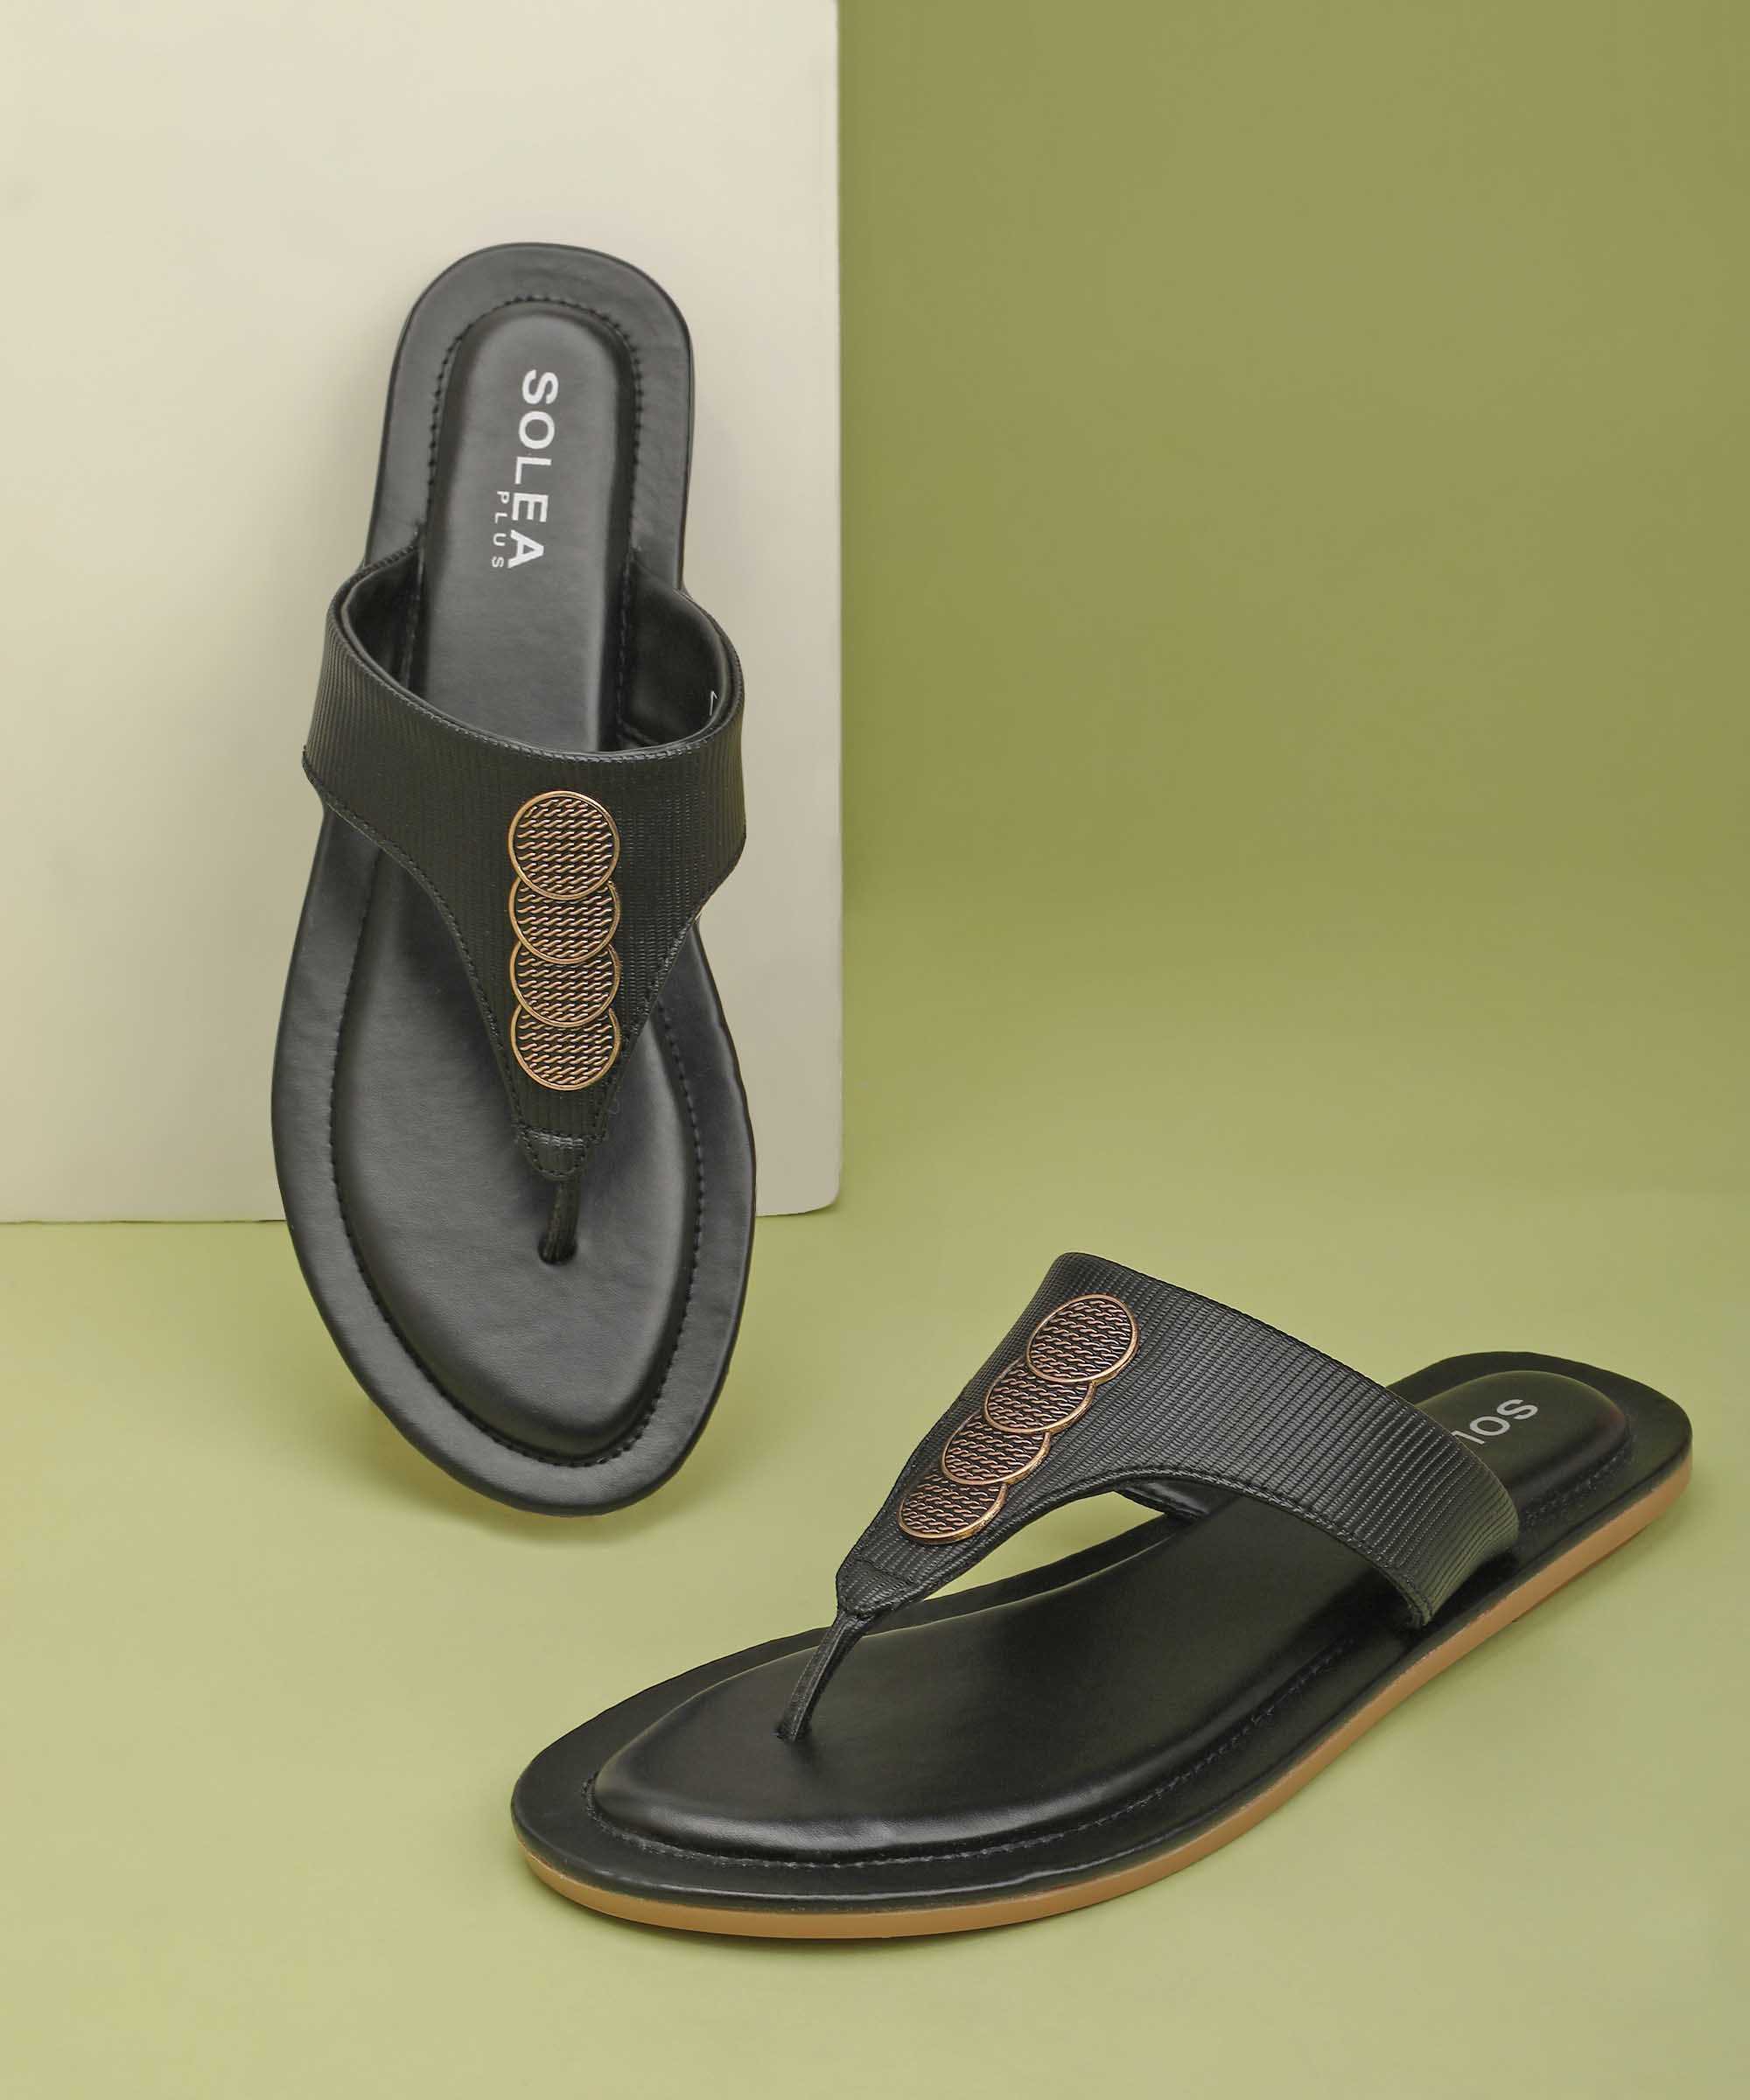 Glow Green EVA Platform Paragon Slippers For Men For Men And Women  Comfortable Designer Sandals With Flip Flops For Summer From Shoesgzno1,  $26.6 | DHgate.Com